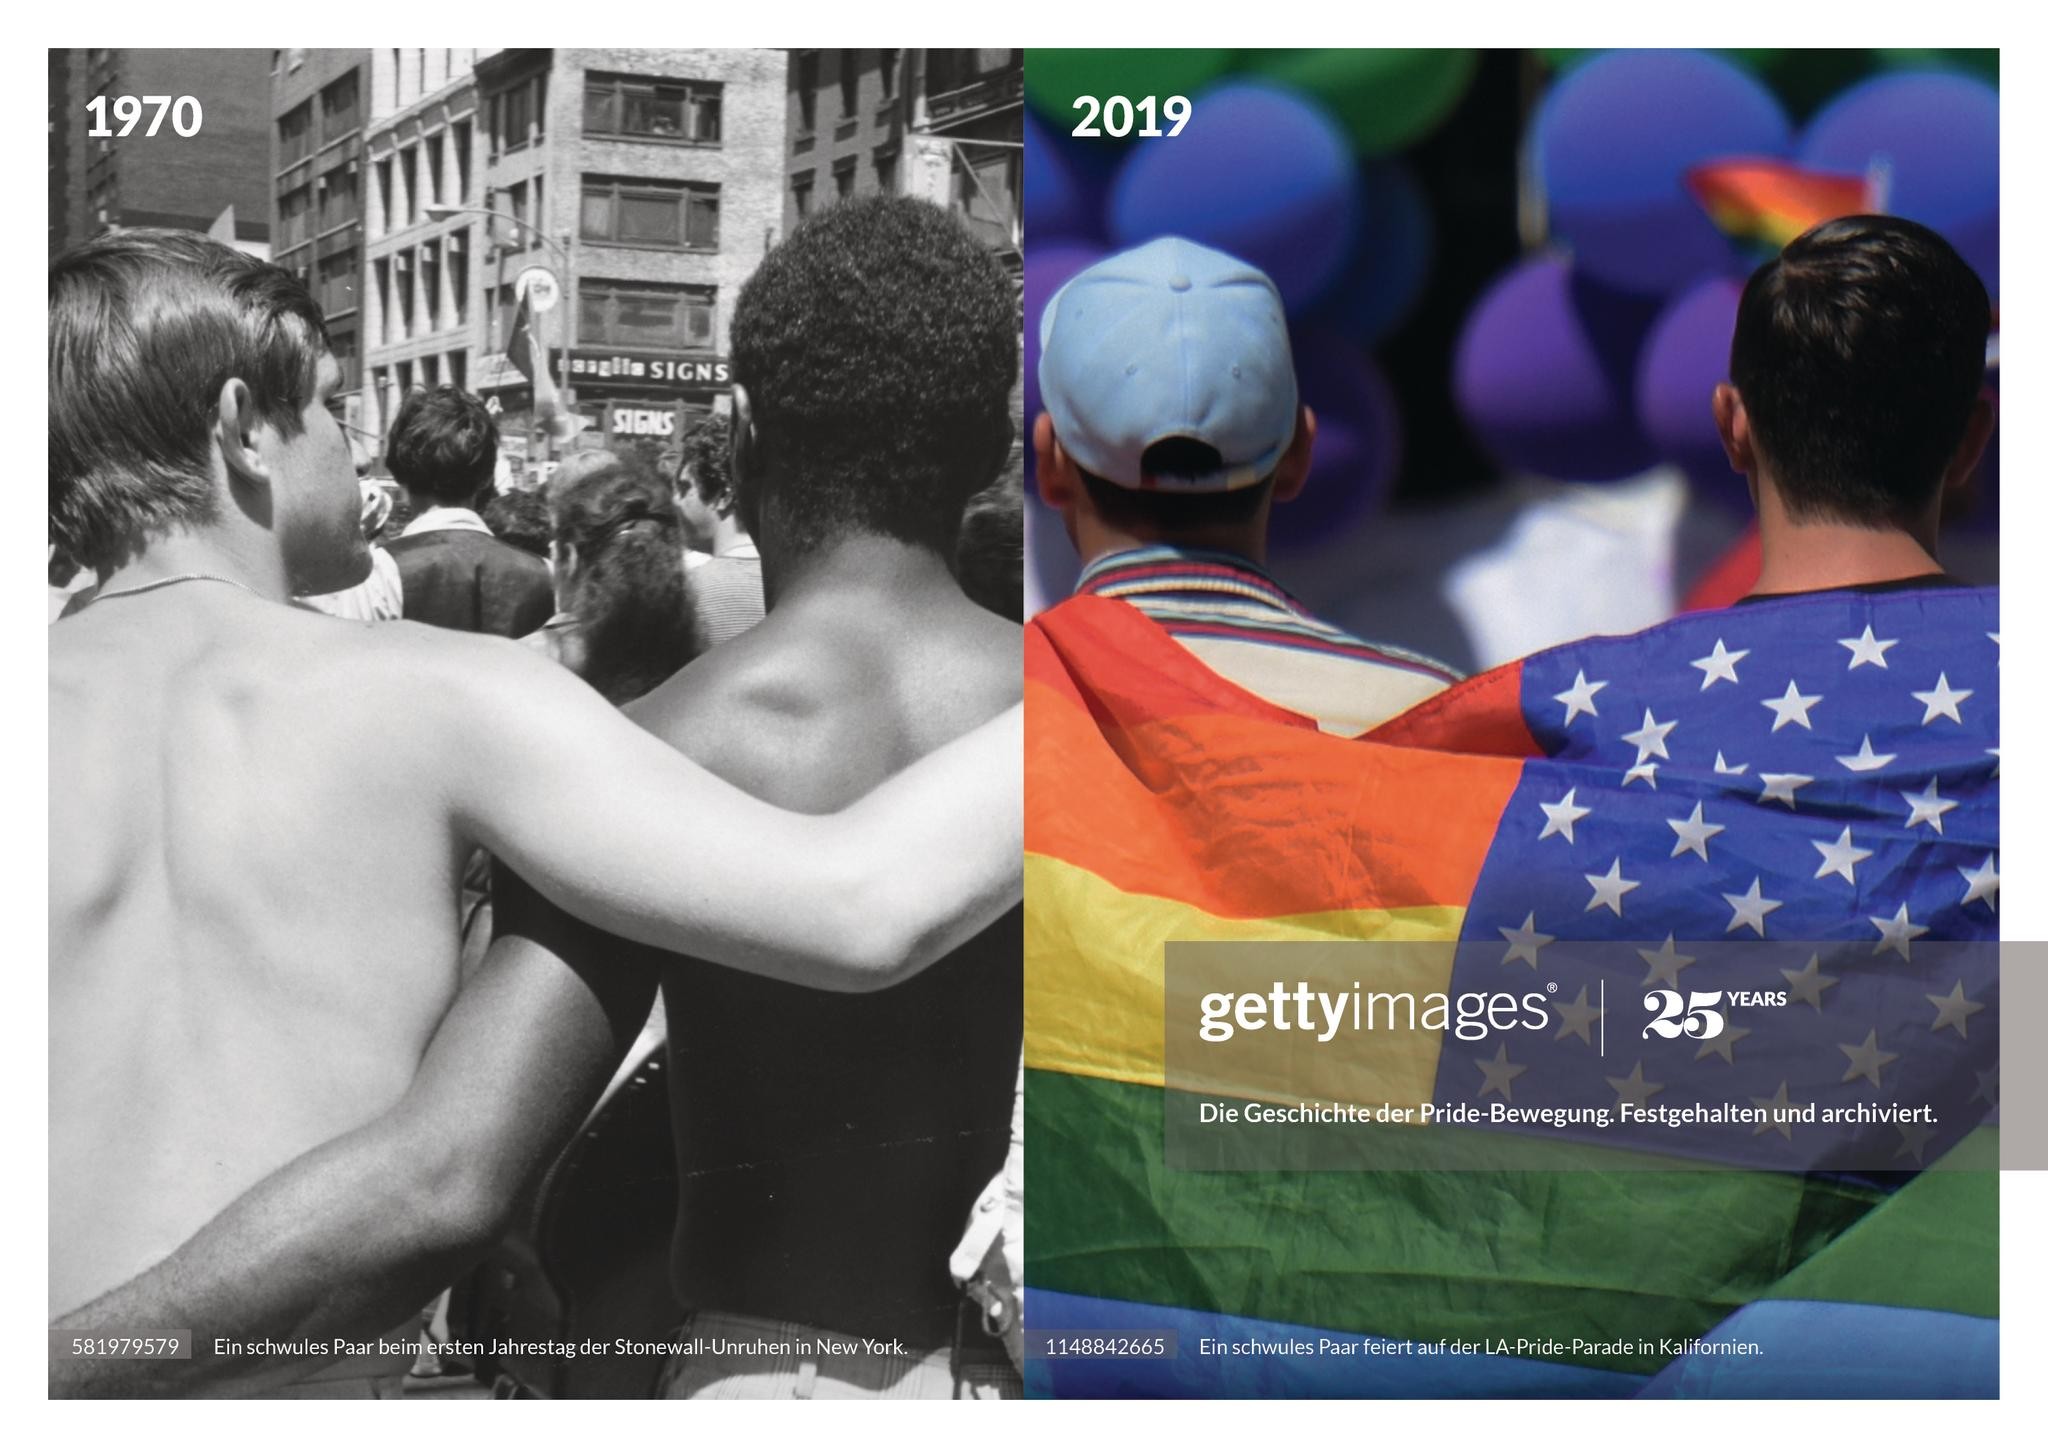 History repeats - Pride